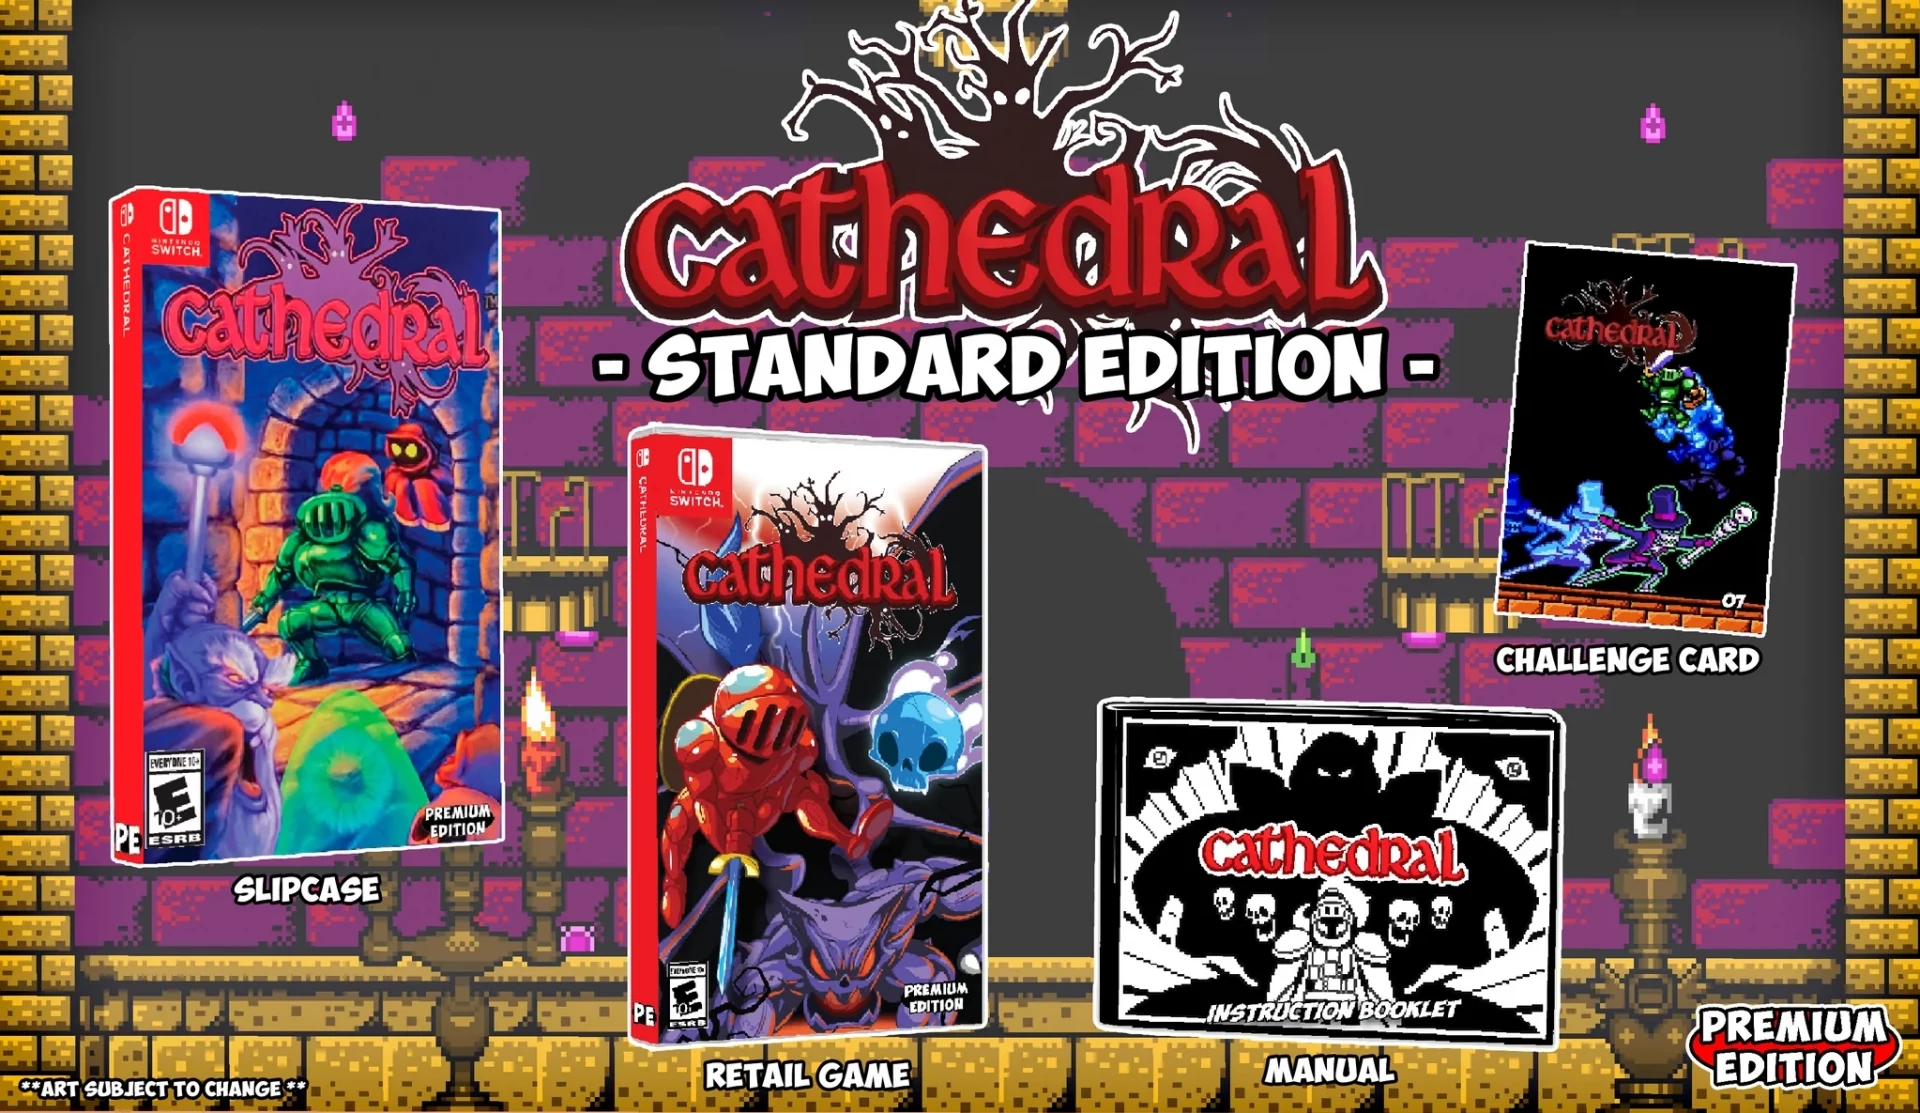 Cathedral - Premium Edition (USA Import) (Switch), Premium Edition Games